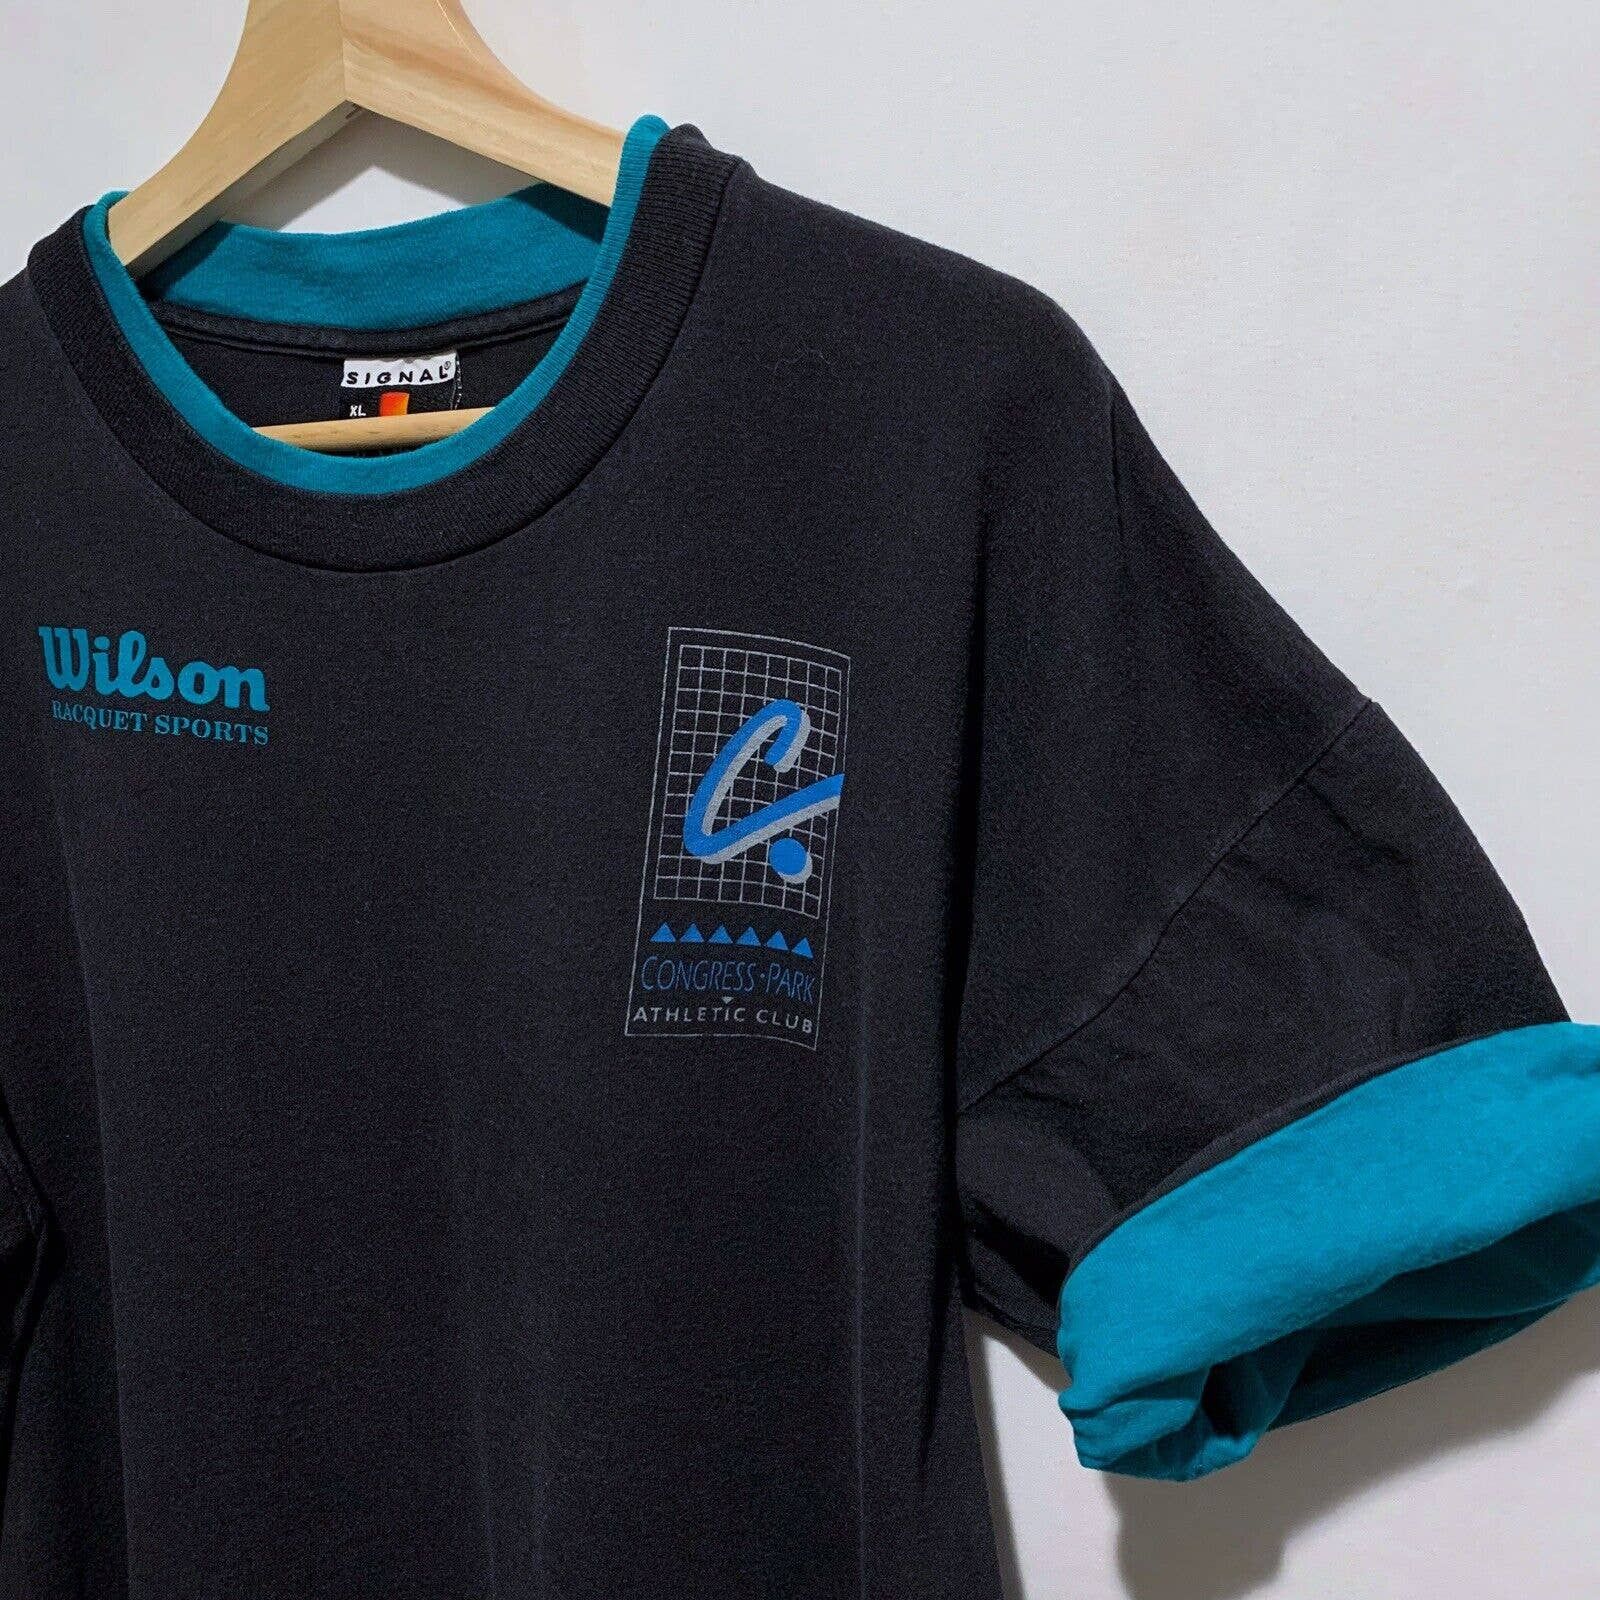 Vintage Vintage 90s Wilson Racquet Sports Rare T Shirt Size XL Black Size US XL / EU 56 / 4 - 7 Thumbnail